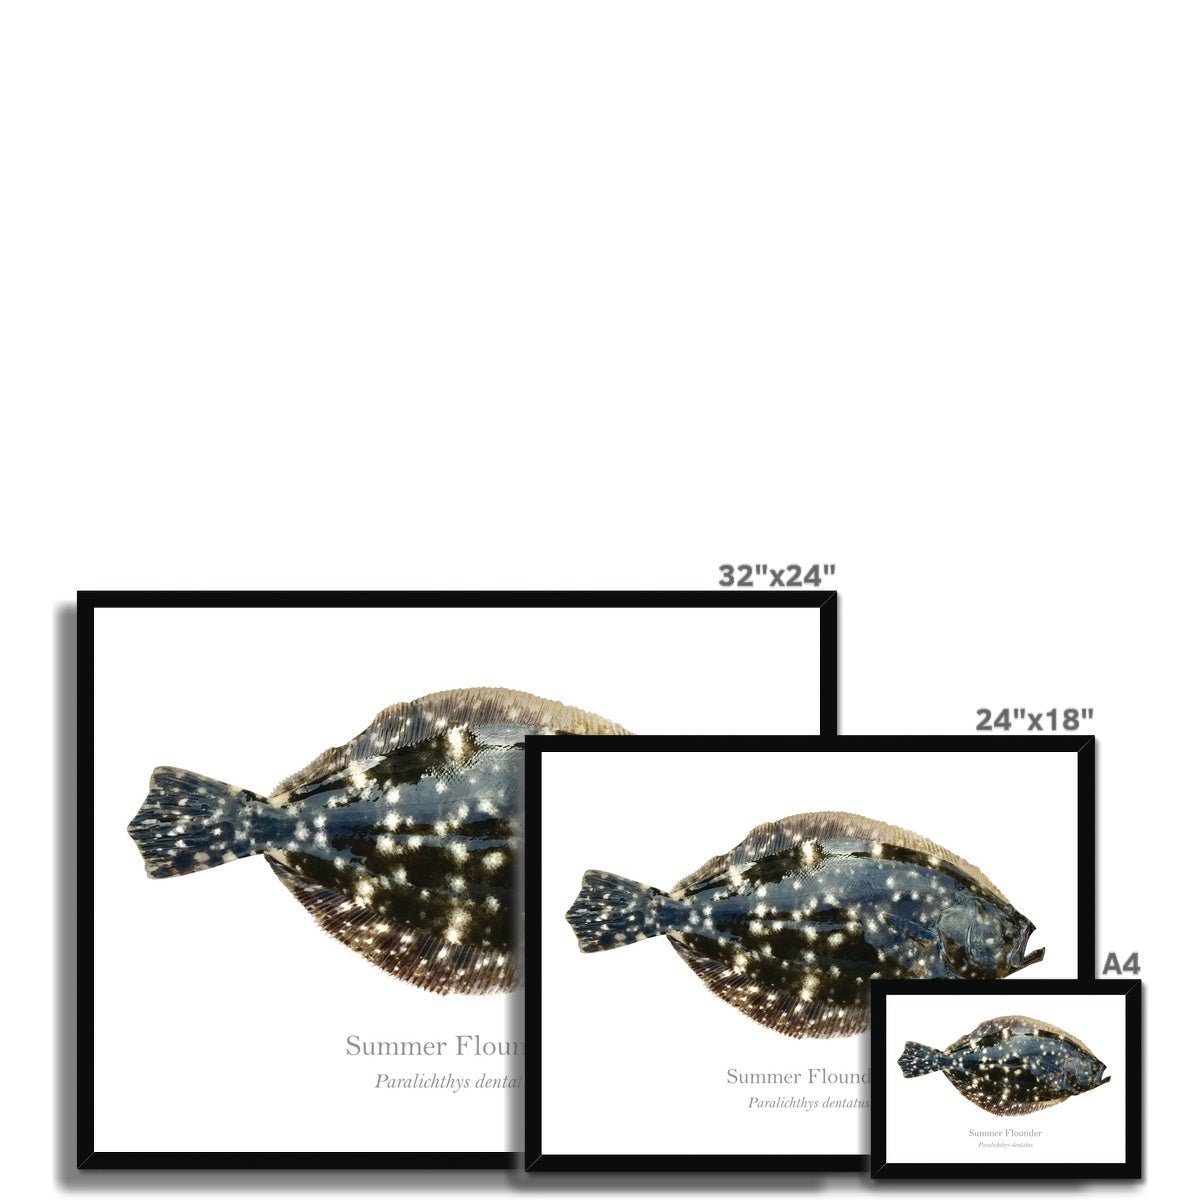 Summer Flounder - Framed Print - With Scientific Name - madfishlab.com